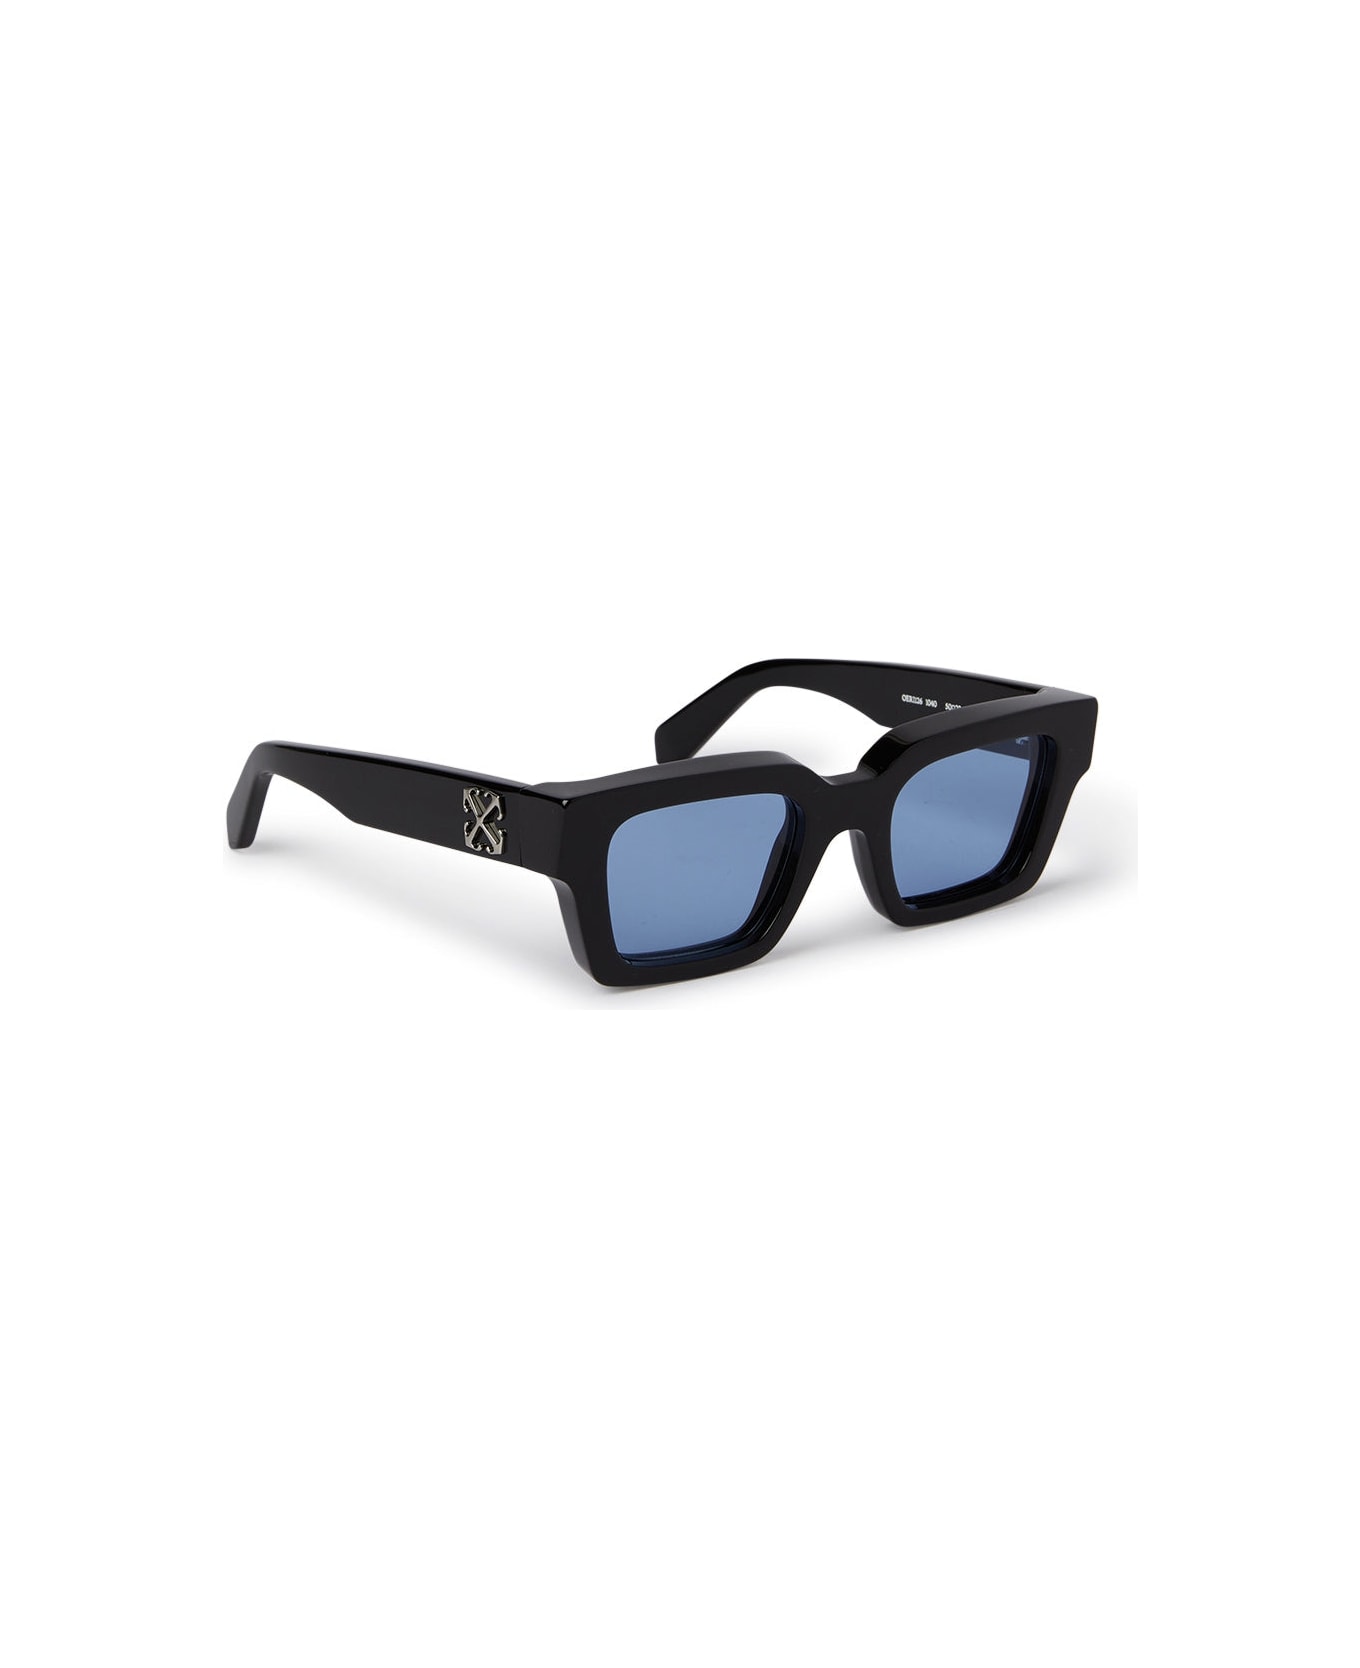 Off-White Virgil - Size M beckham Sunglasses